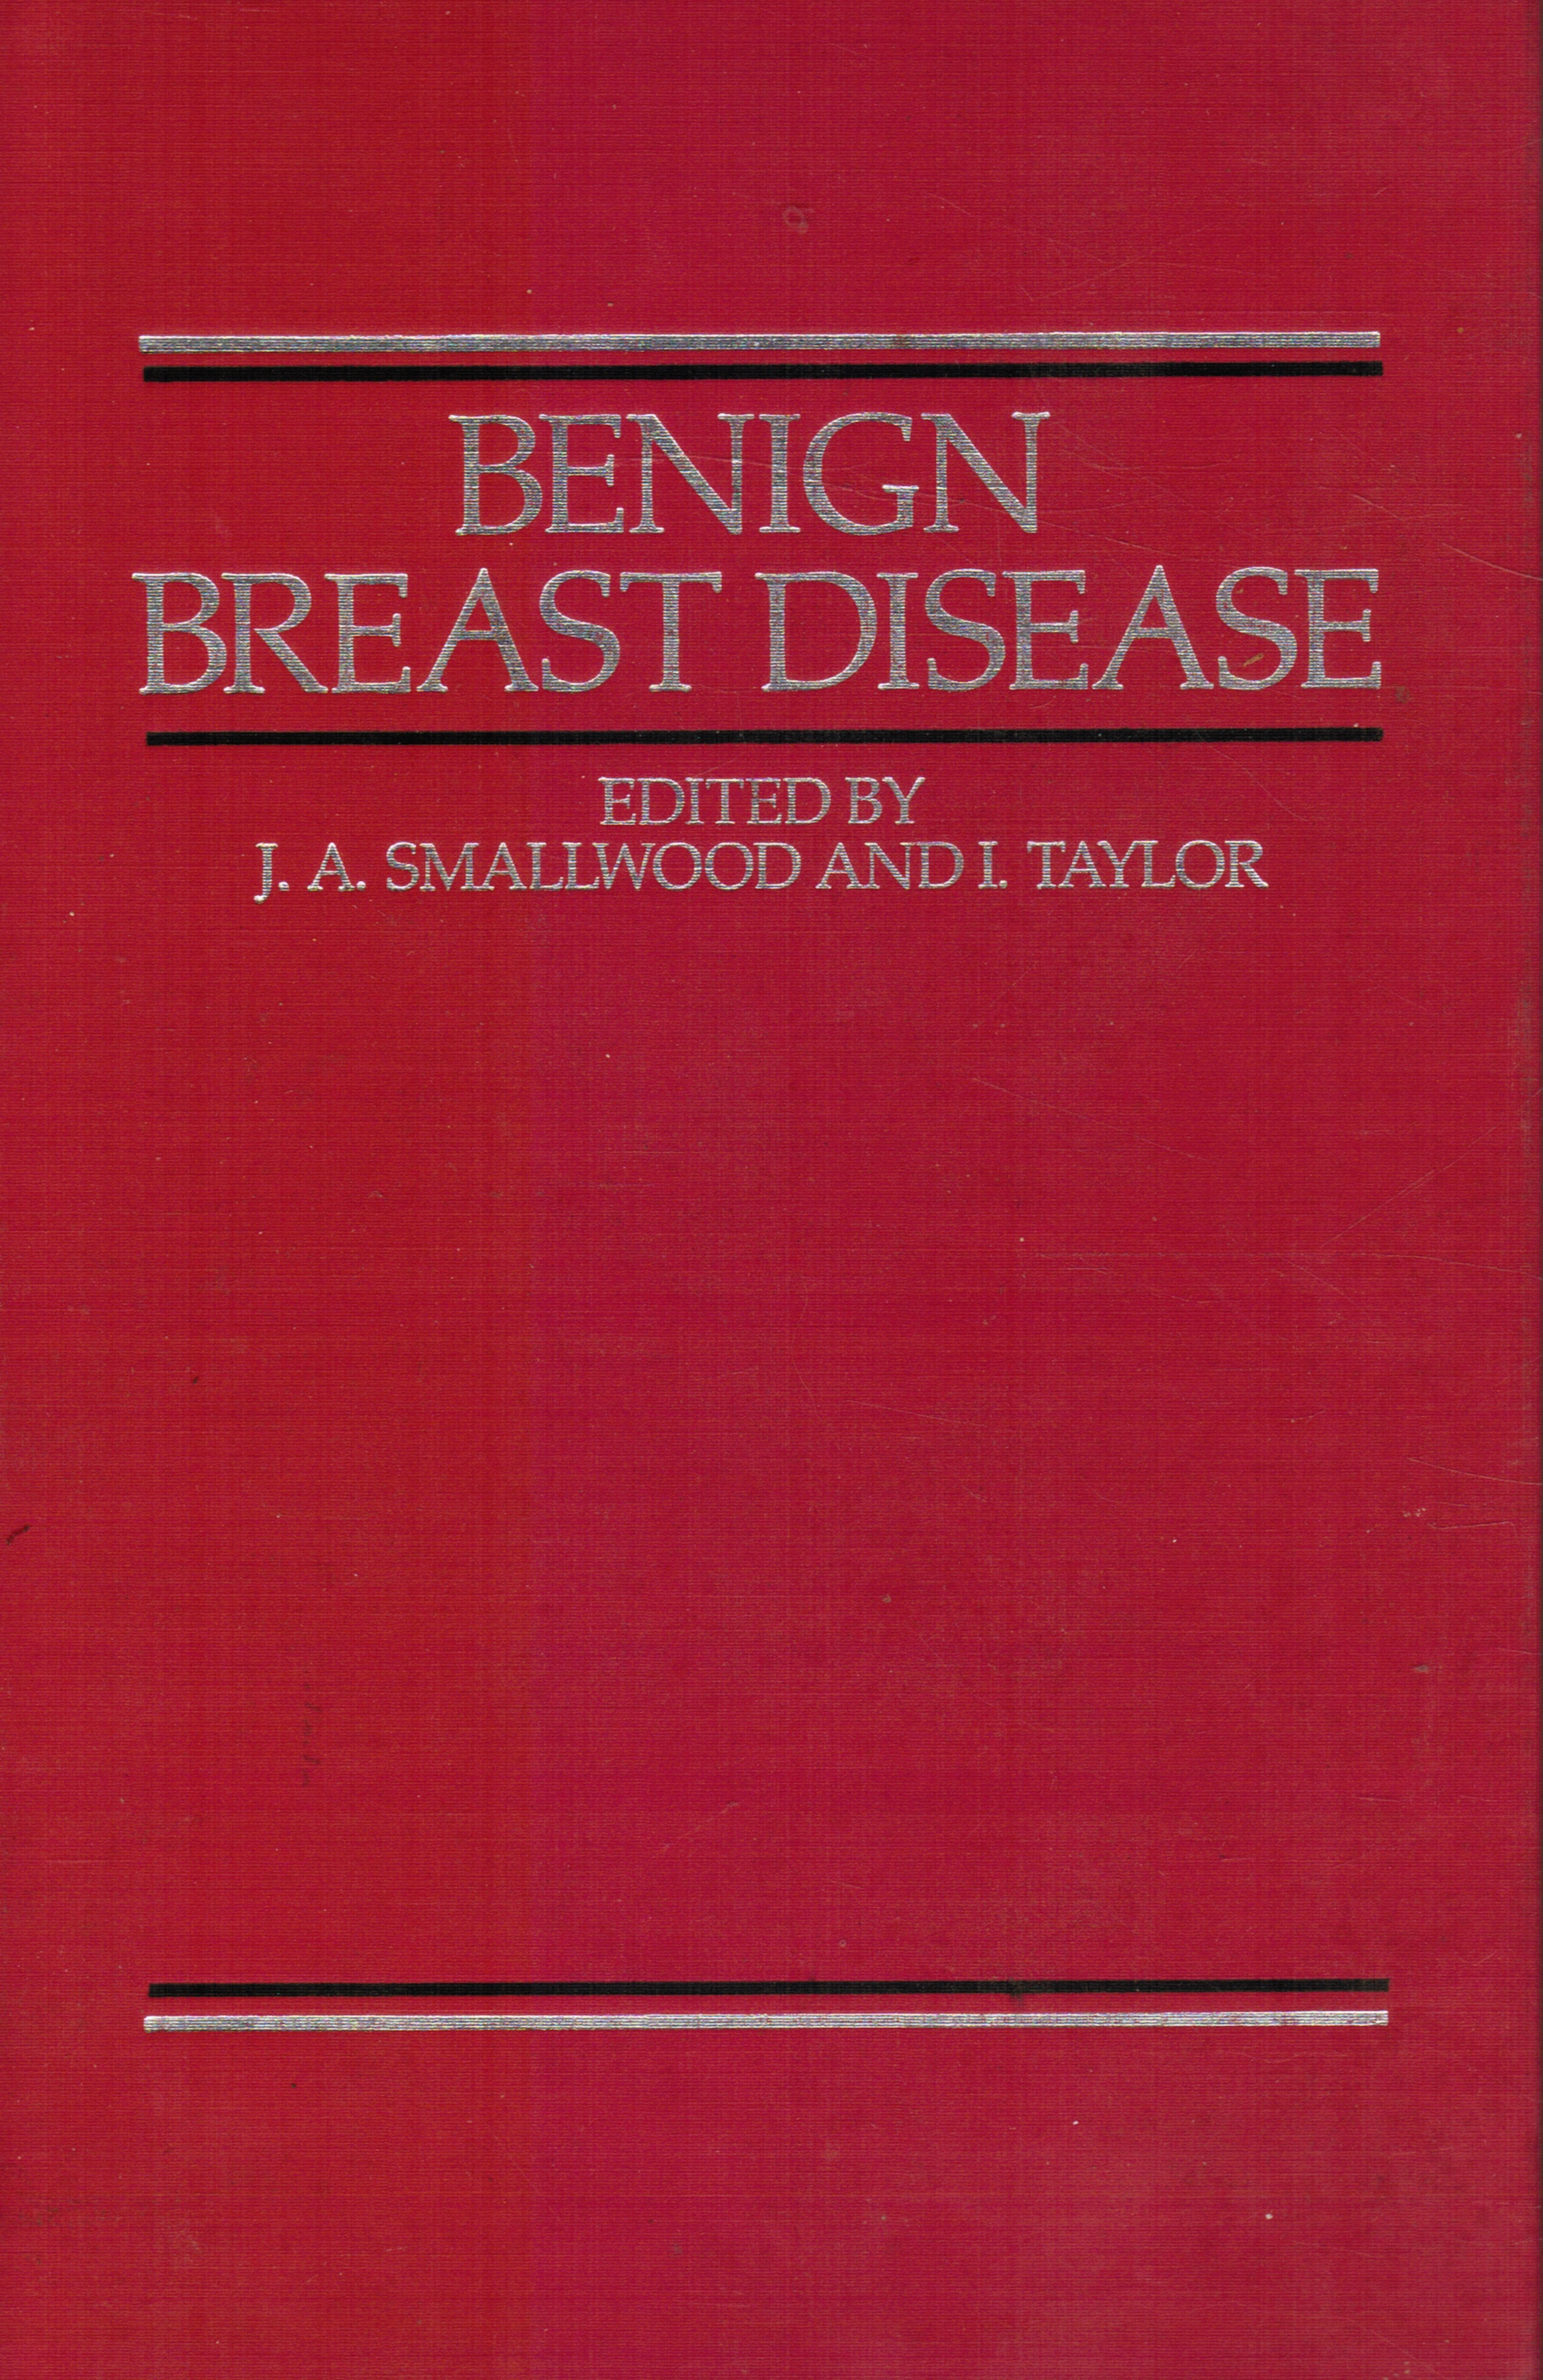 SMALLWOOD, JAMES A. ; TAYLOR, IRVING (EDITORS) - Benign Breast Disease